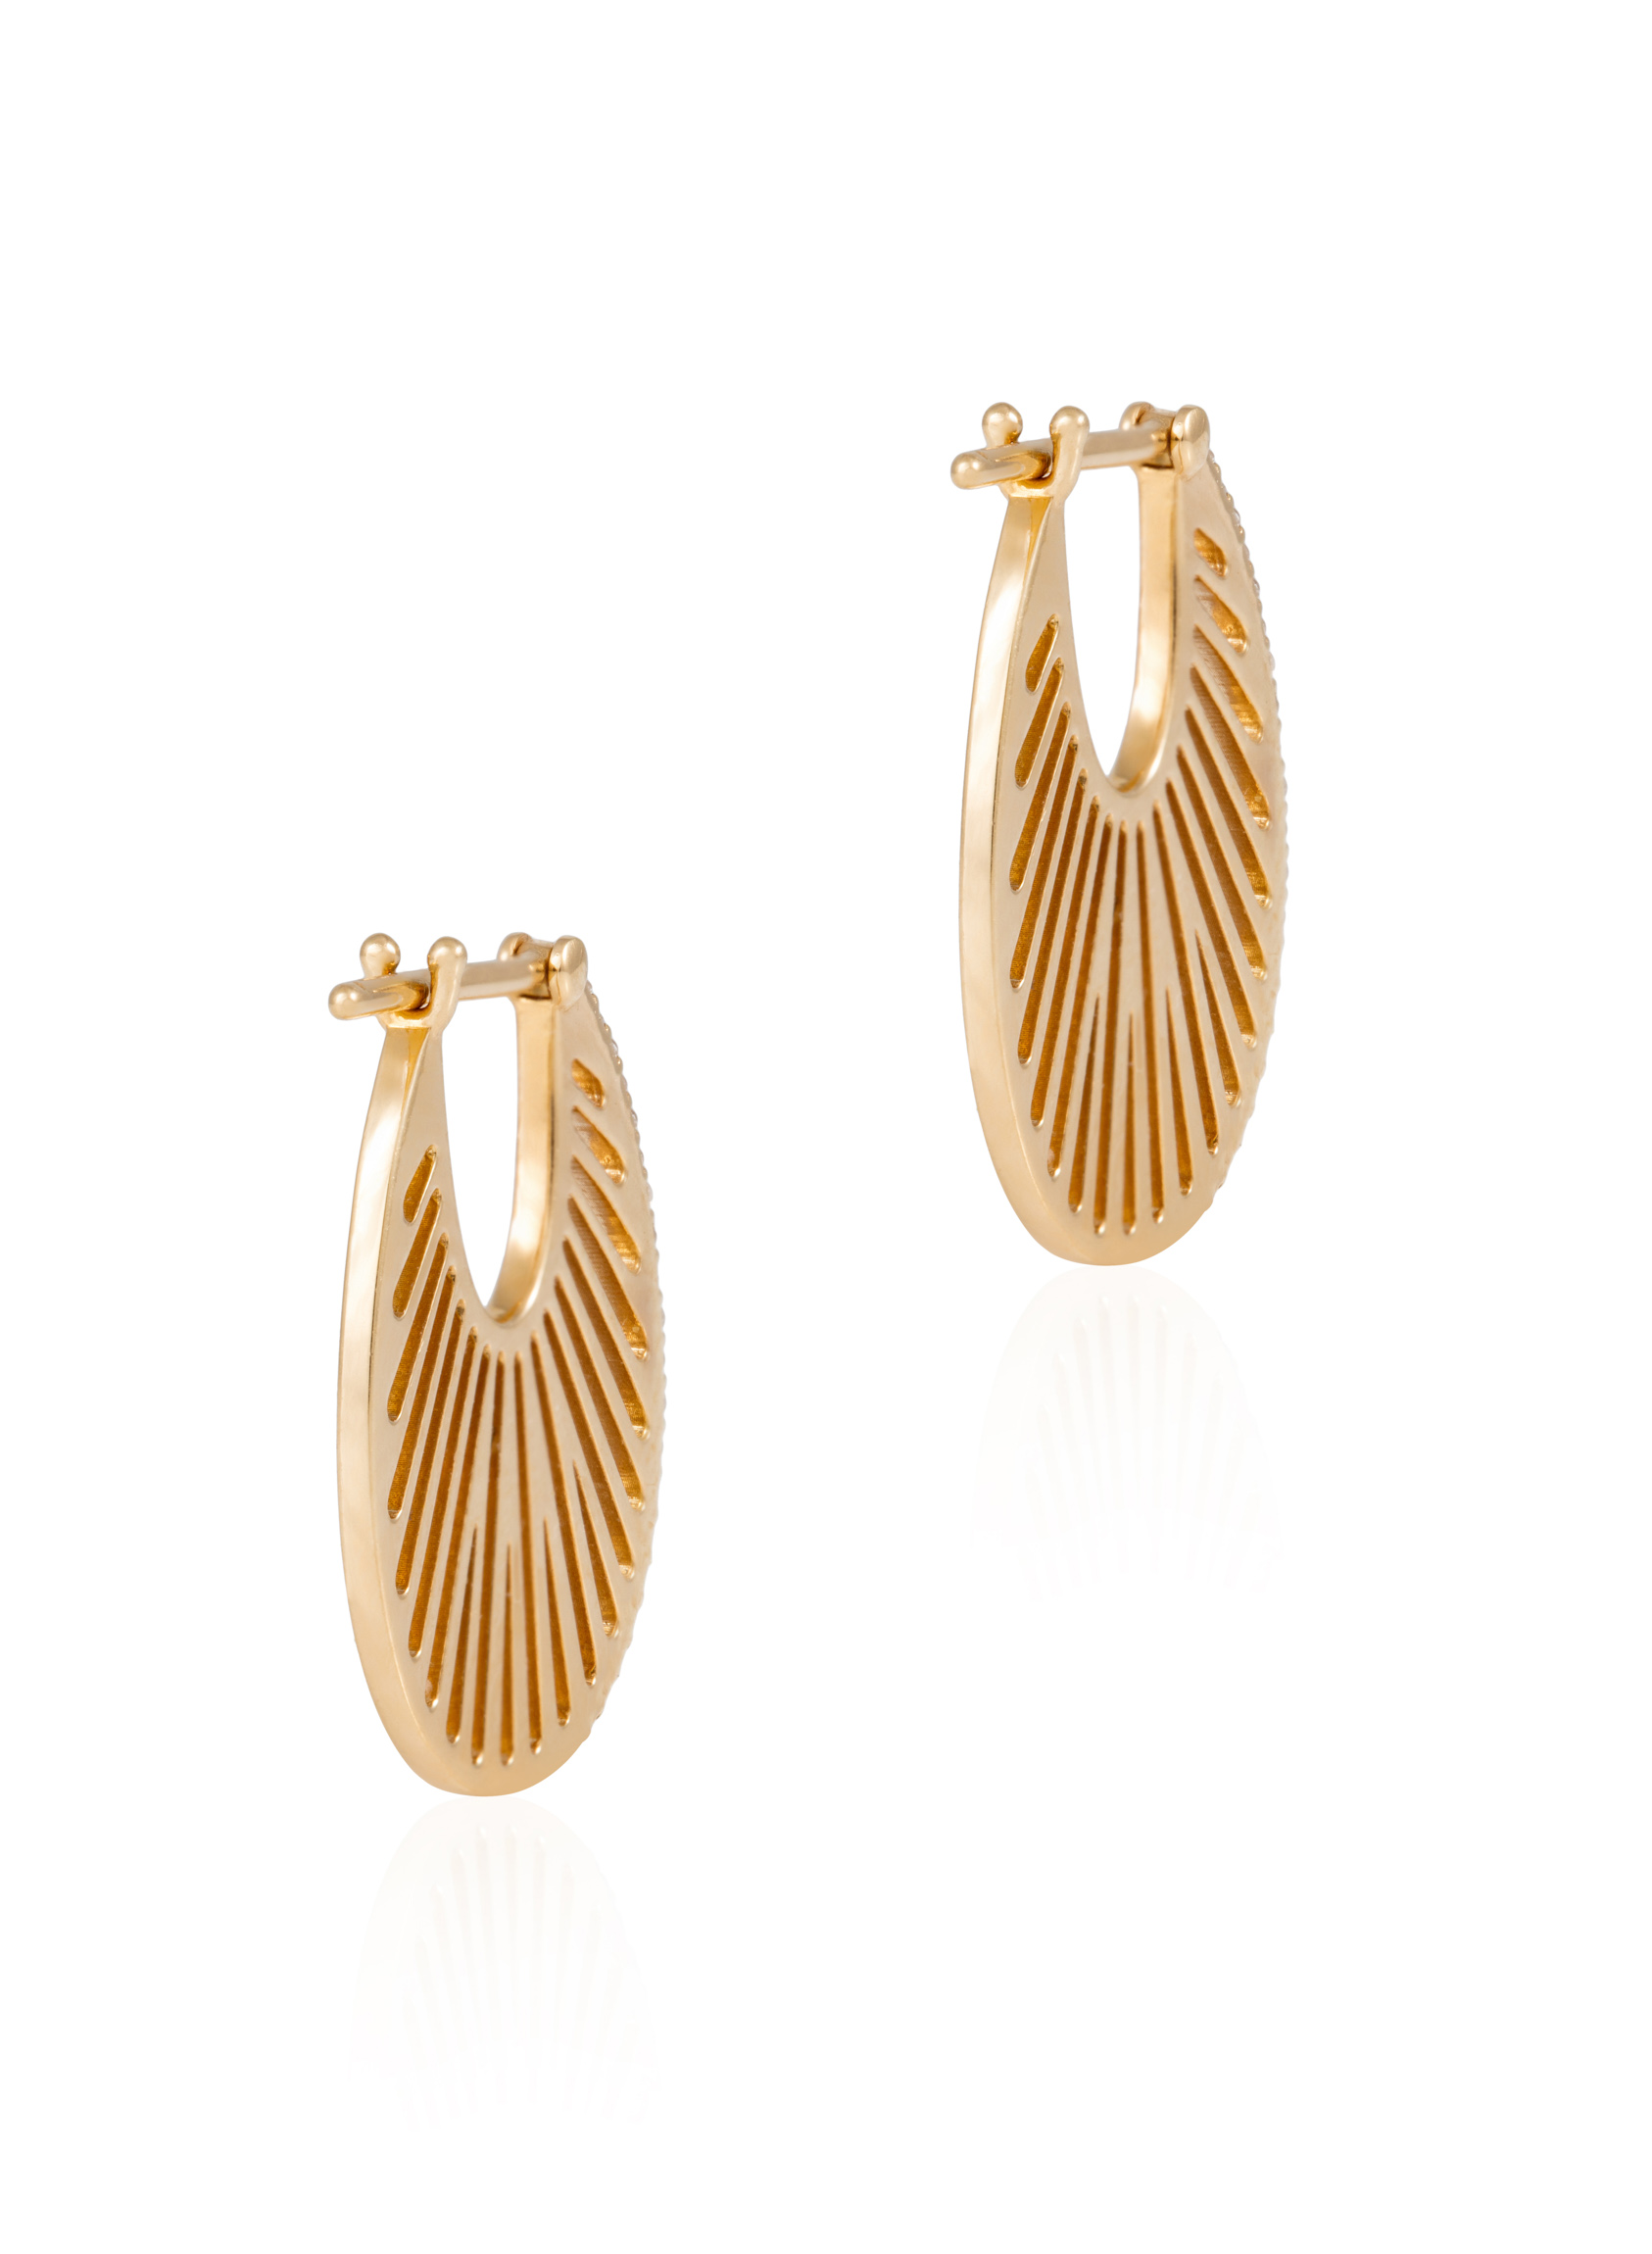 Turquoise Bamboo Hoops - Size 2 - Earrings - Latelier Nawbar